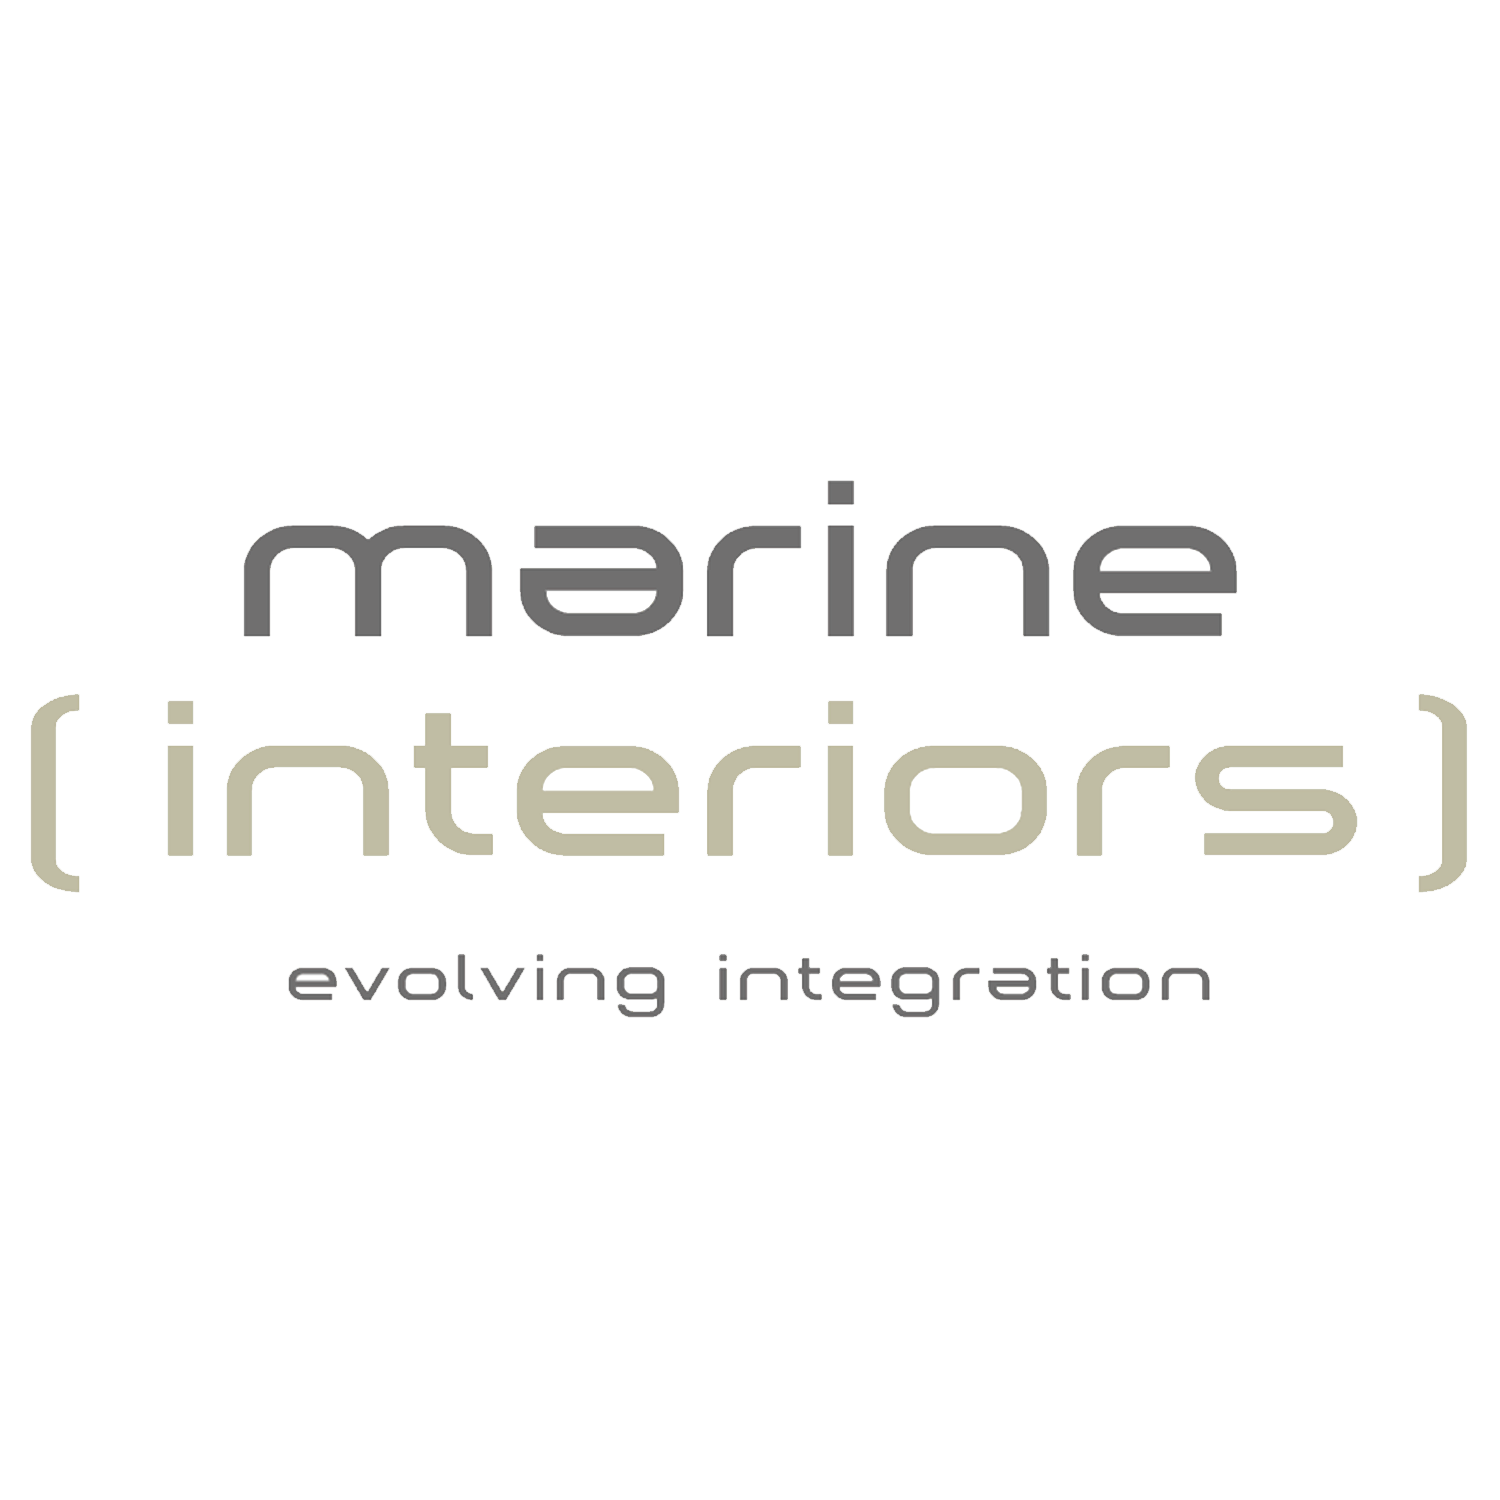 marineinteriors-png-661596ec49dce